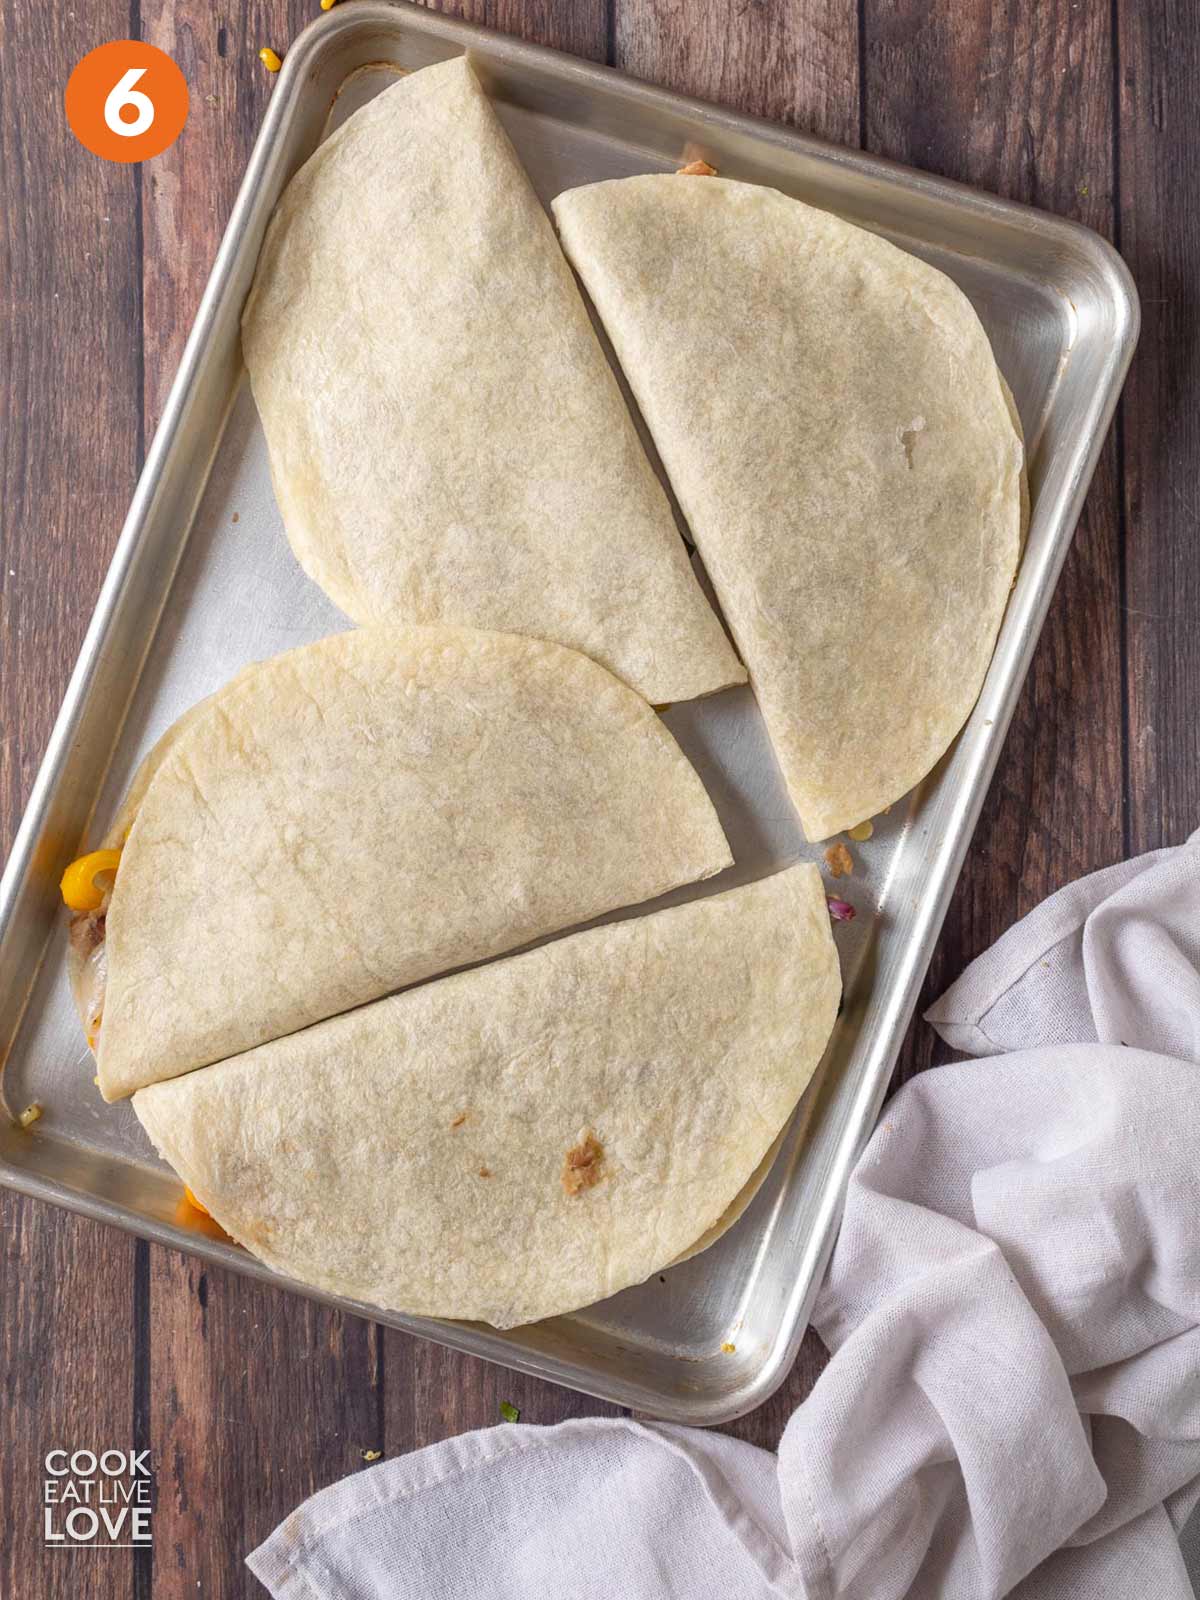 Folded quesadillas are ready on a baking sheet.